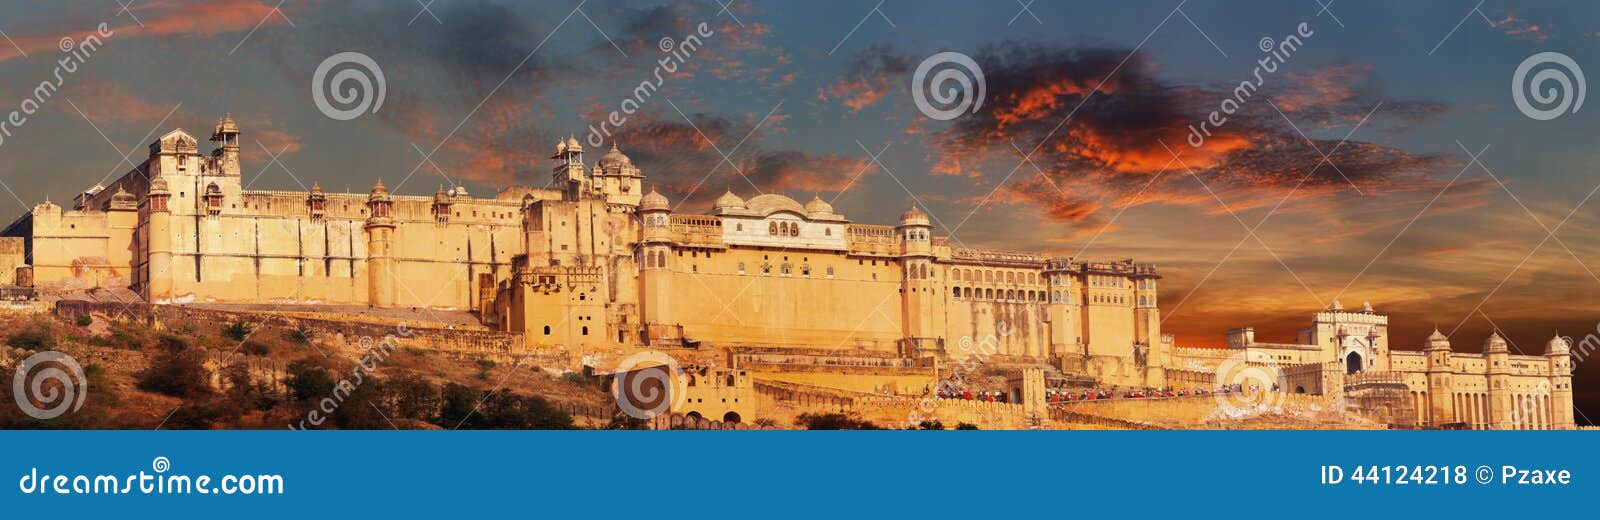 india landmark - jaipur, amber fort panorama